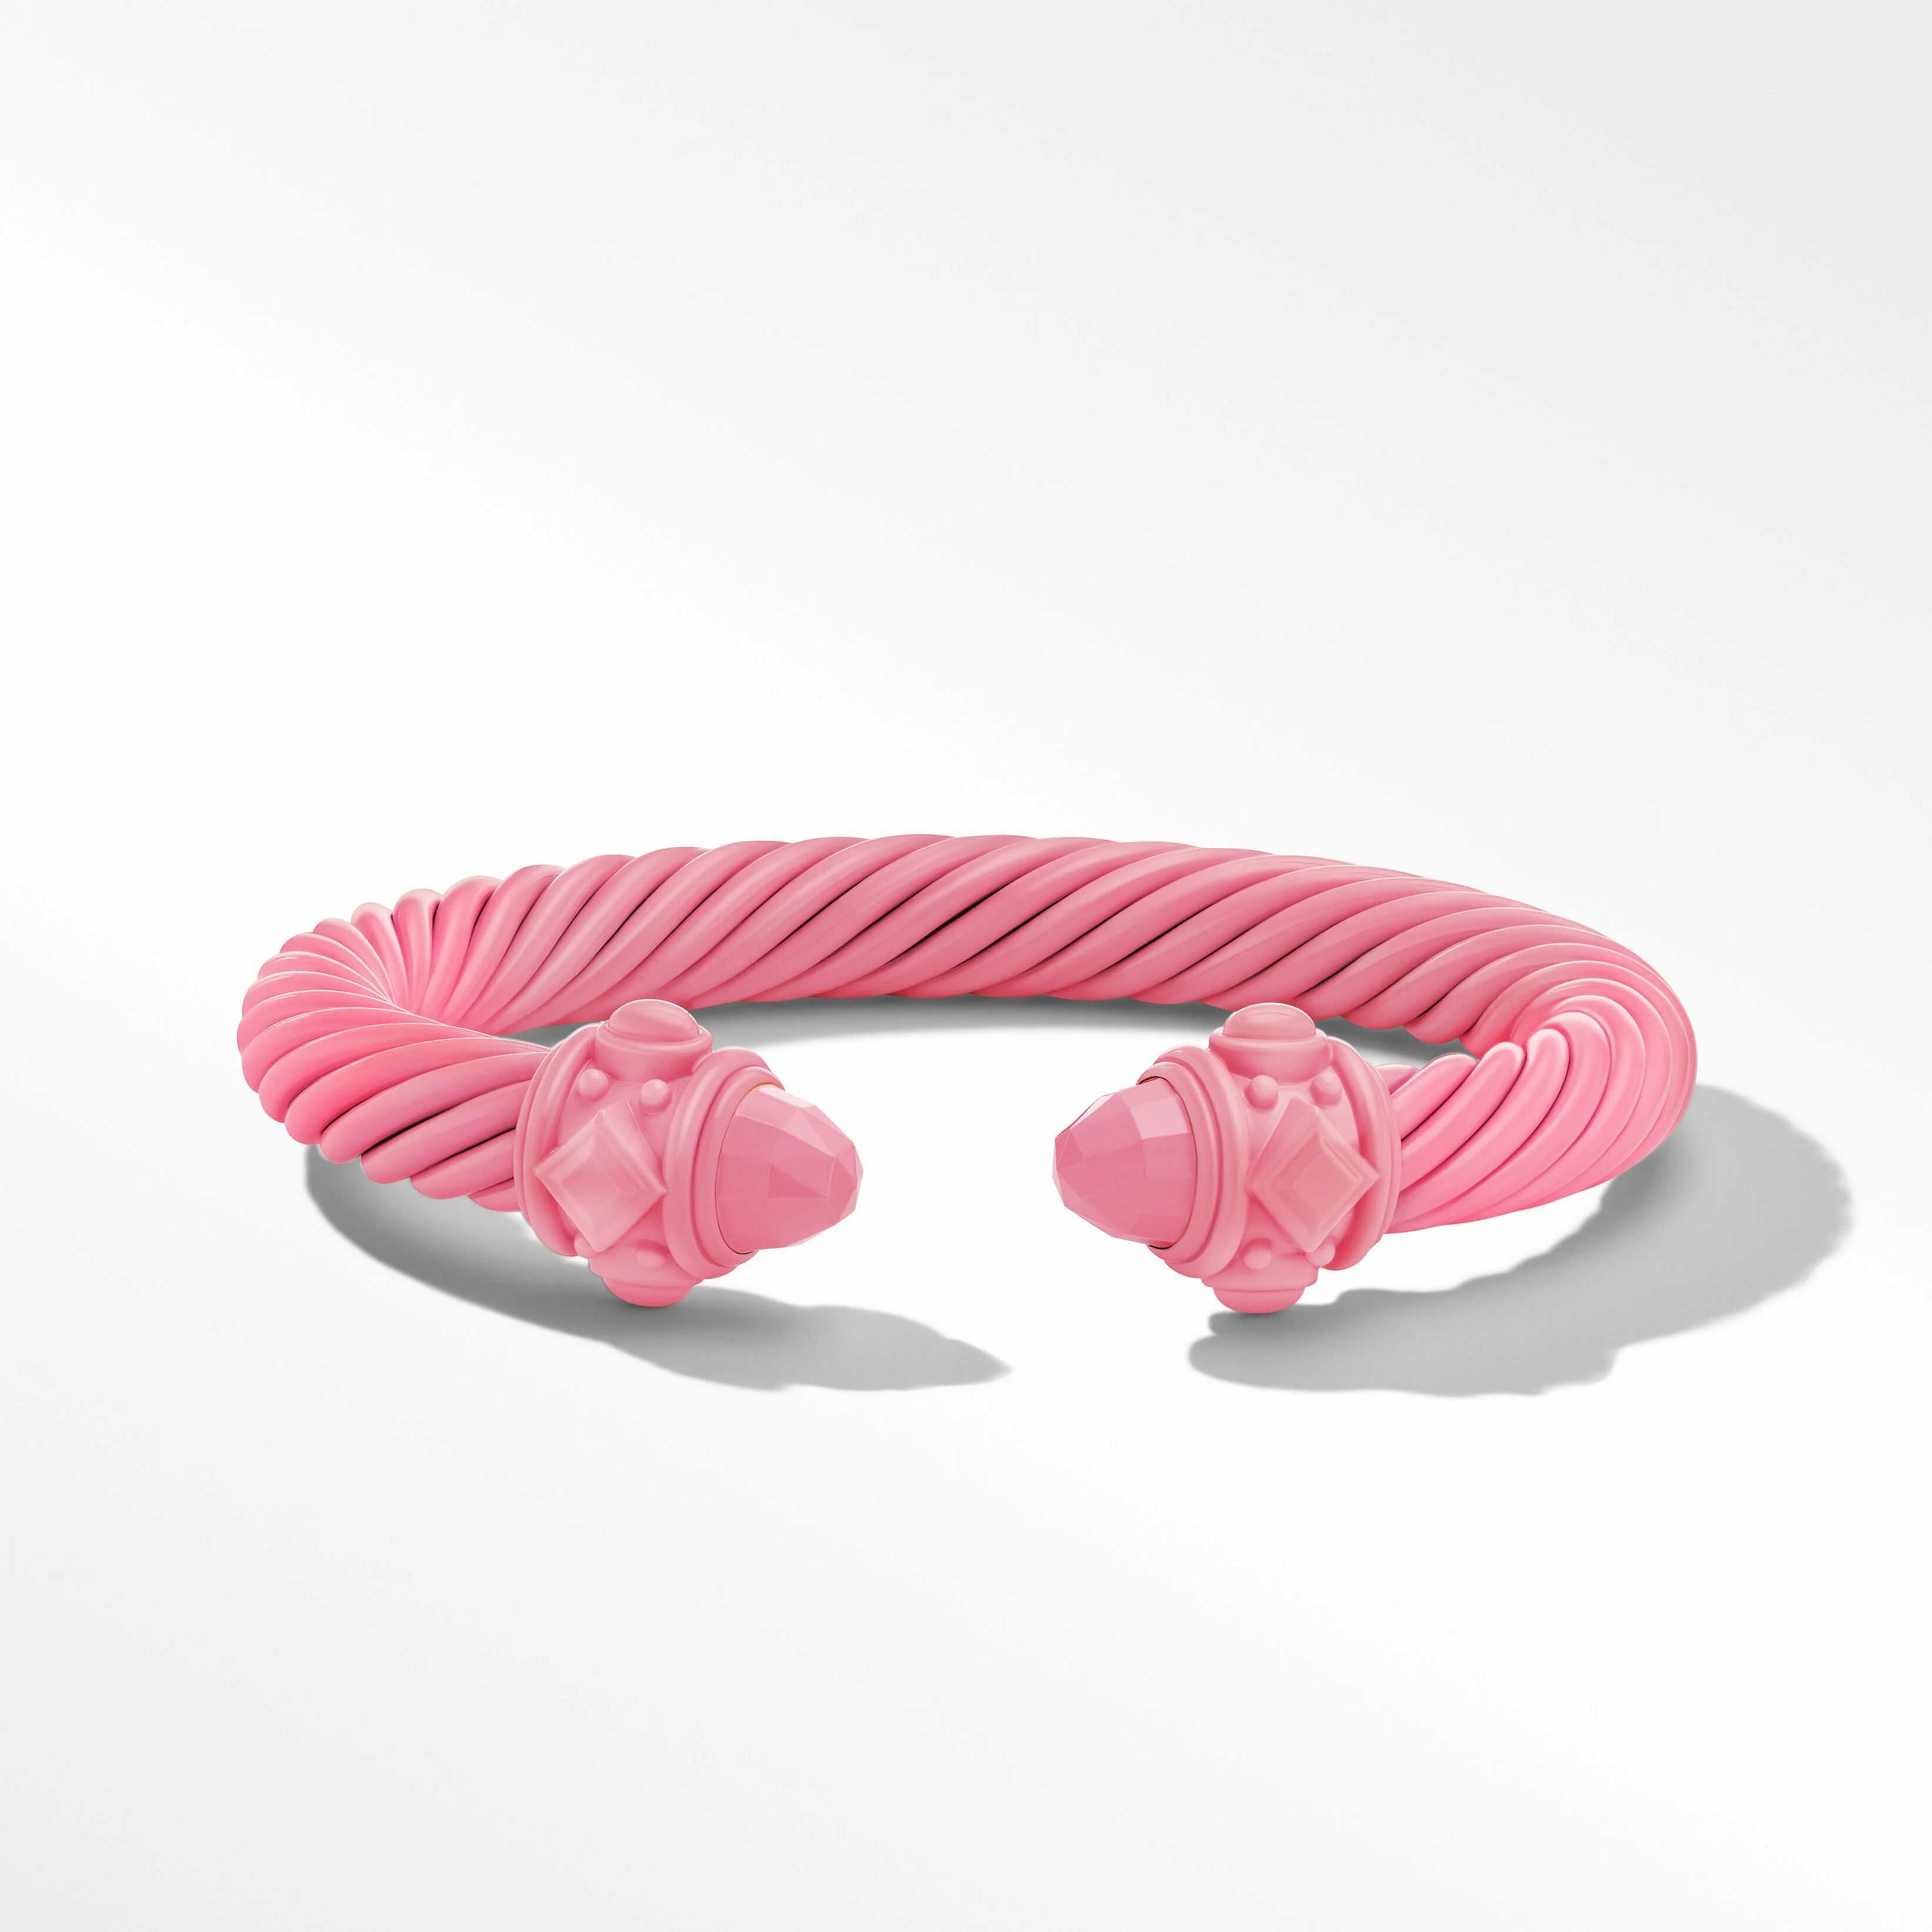 Renaissance Bracelet in Pink Aluminum | David Yurman